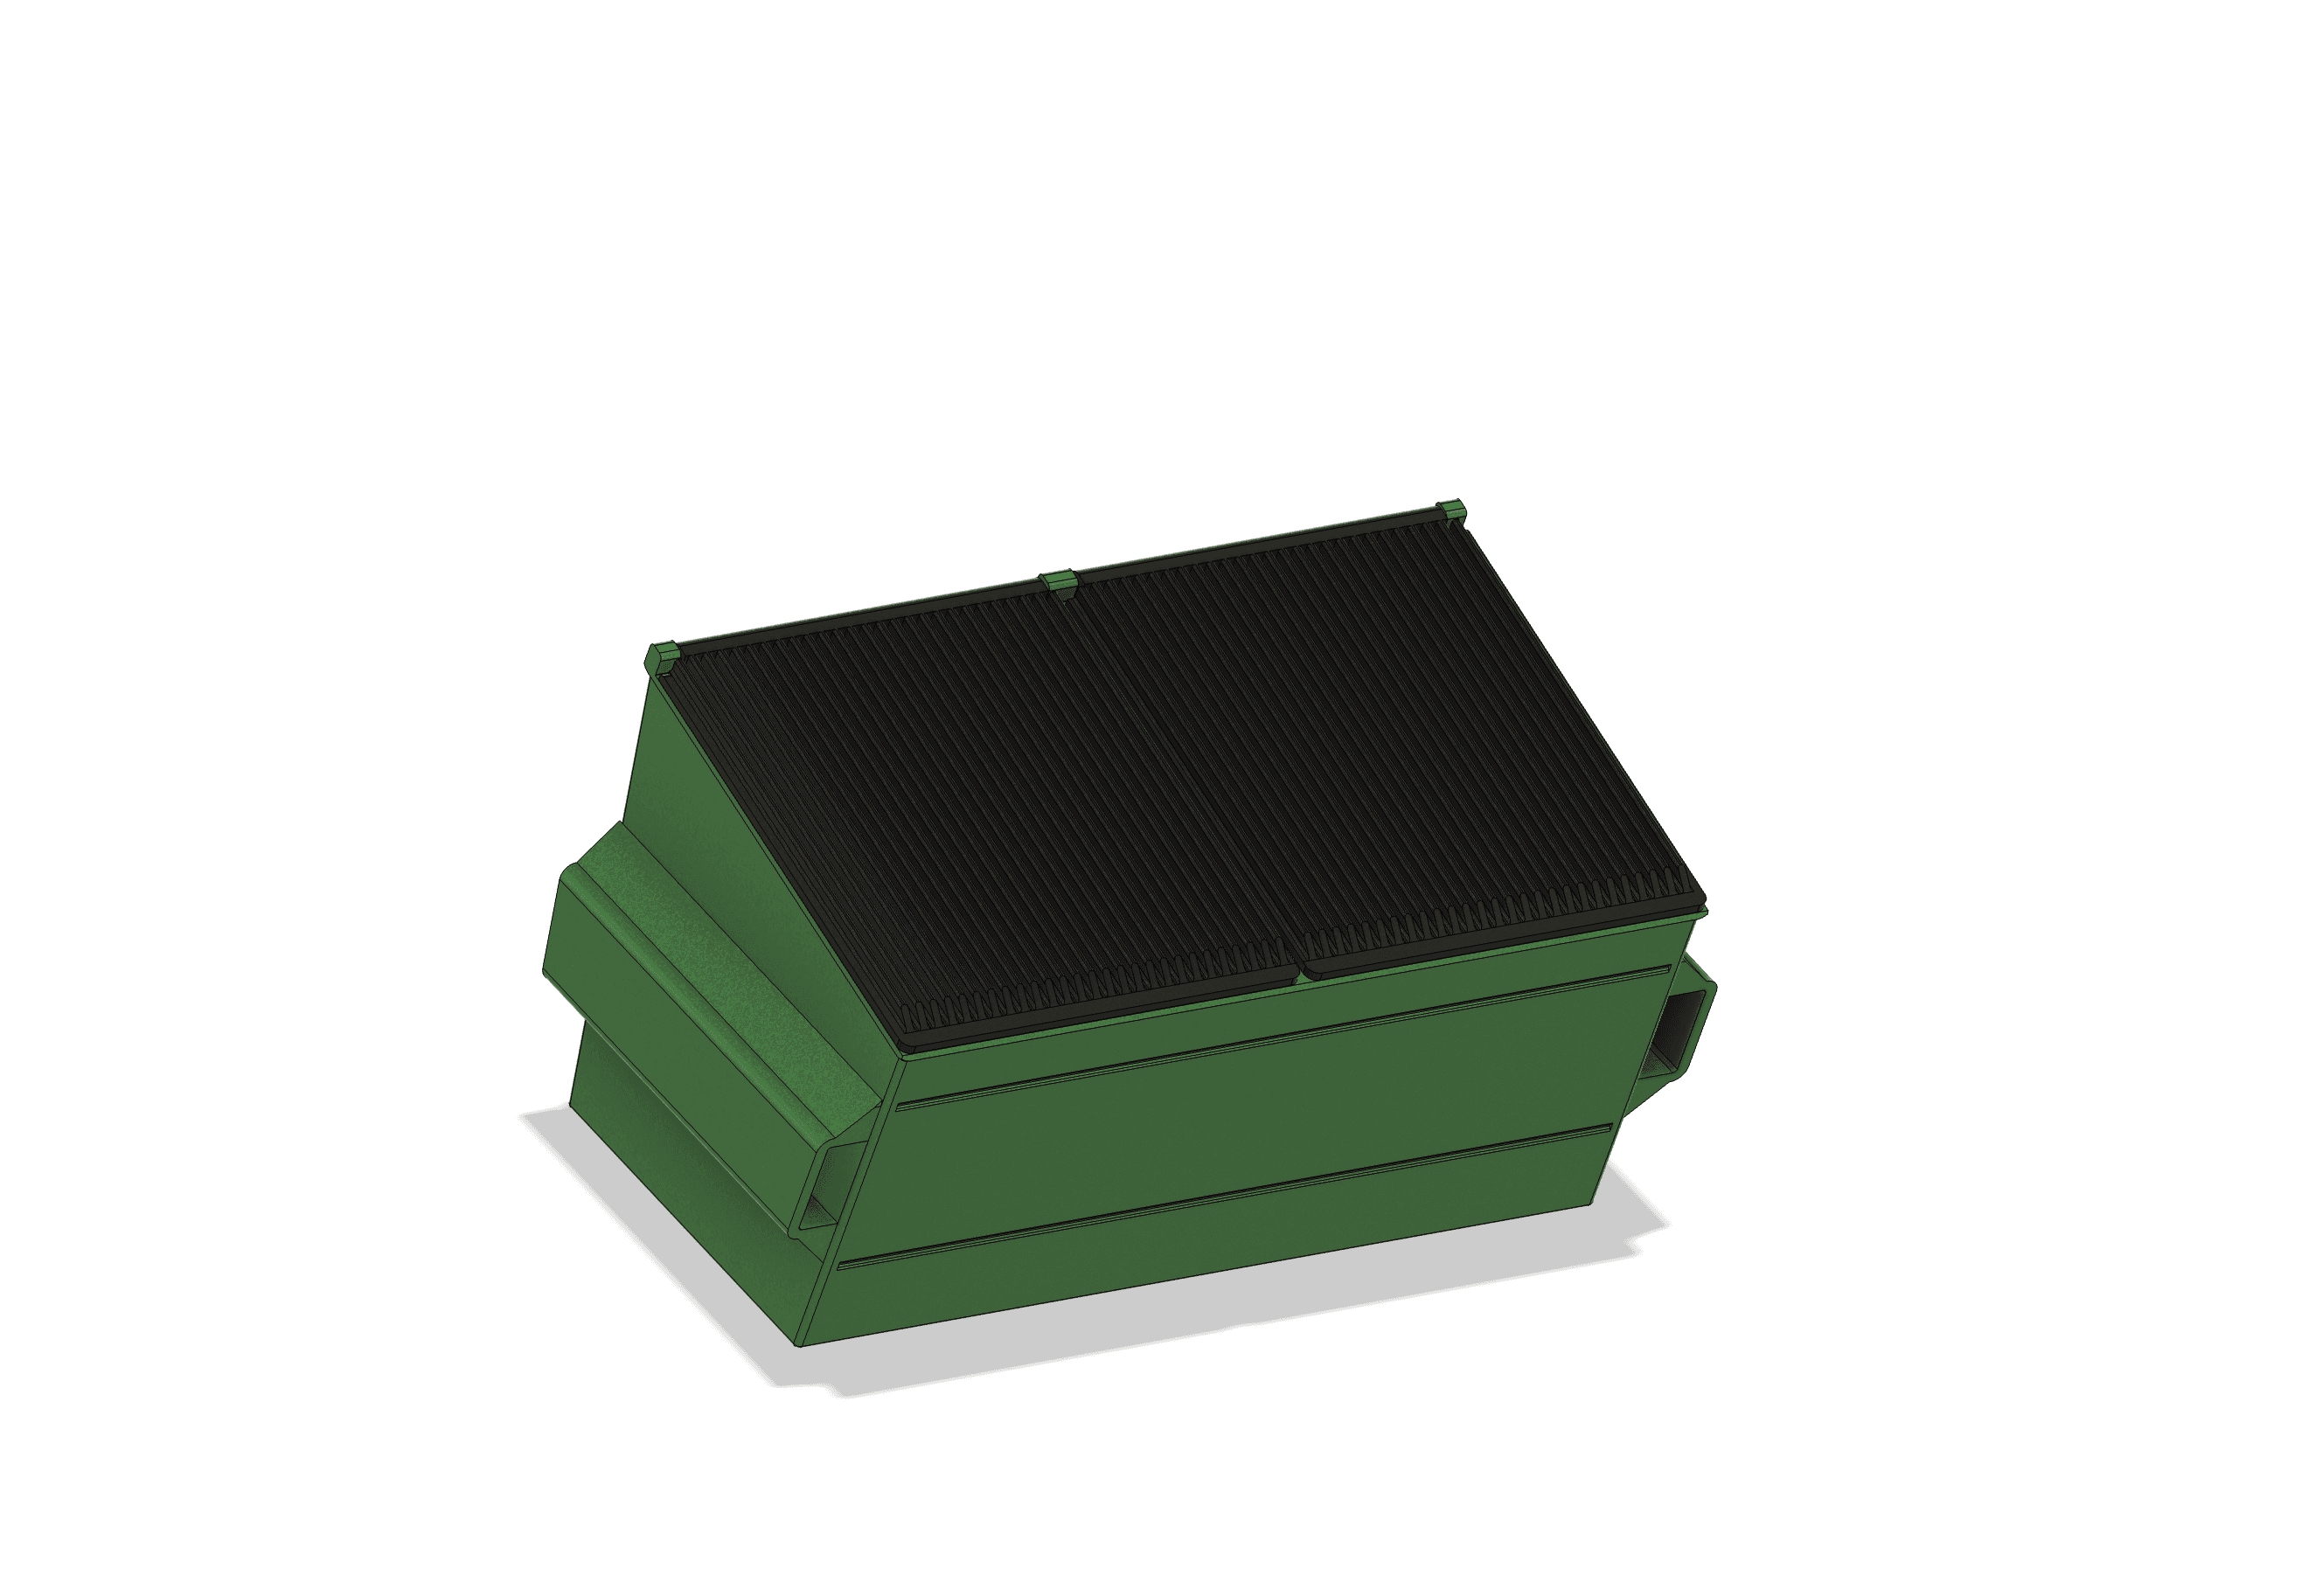 Articulating Mini Dumpster - scale model 3d model